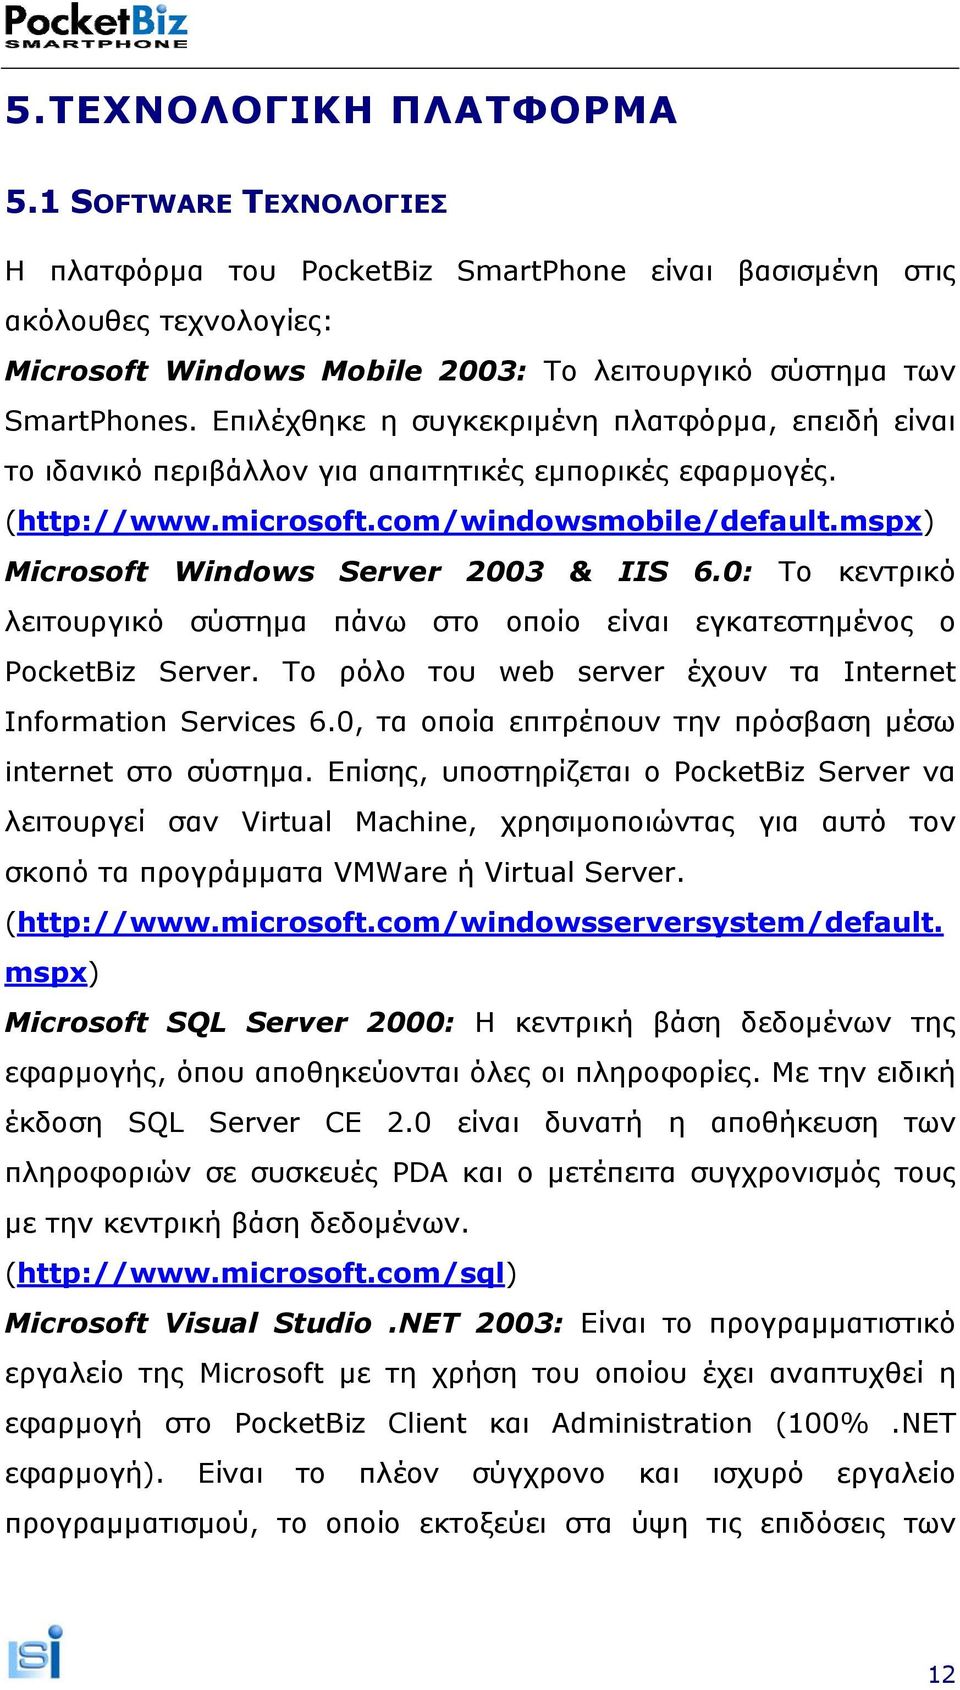 mspx) Microsoft Windows Server 2003 & IIS 6.0: Το κεντρικό λειτουργικό σύστηµα πάνω στο οποίο είναι εγκατεστηµένος ο PocketBiz Server. Το ρόλο του web server έχουν τα Internet Information Services 6.